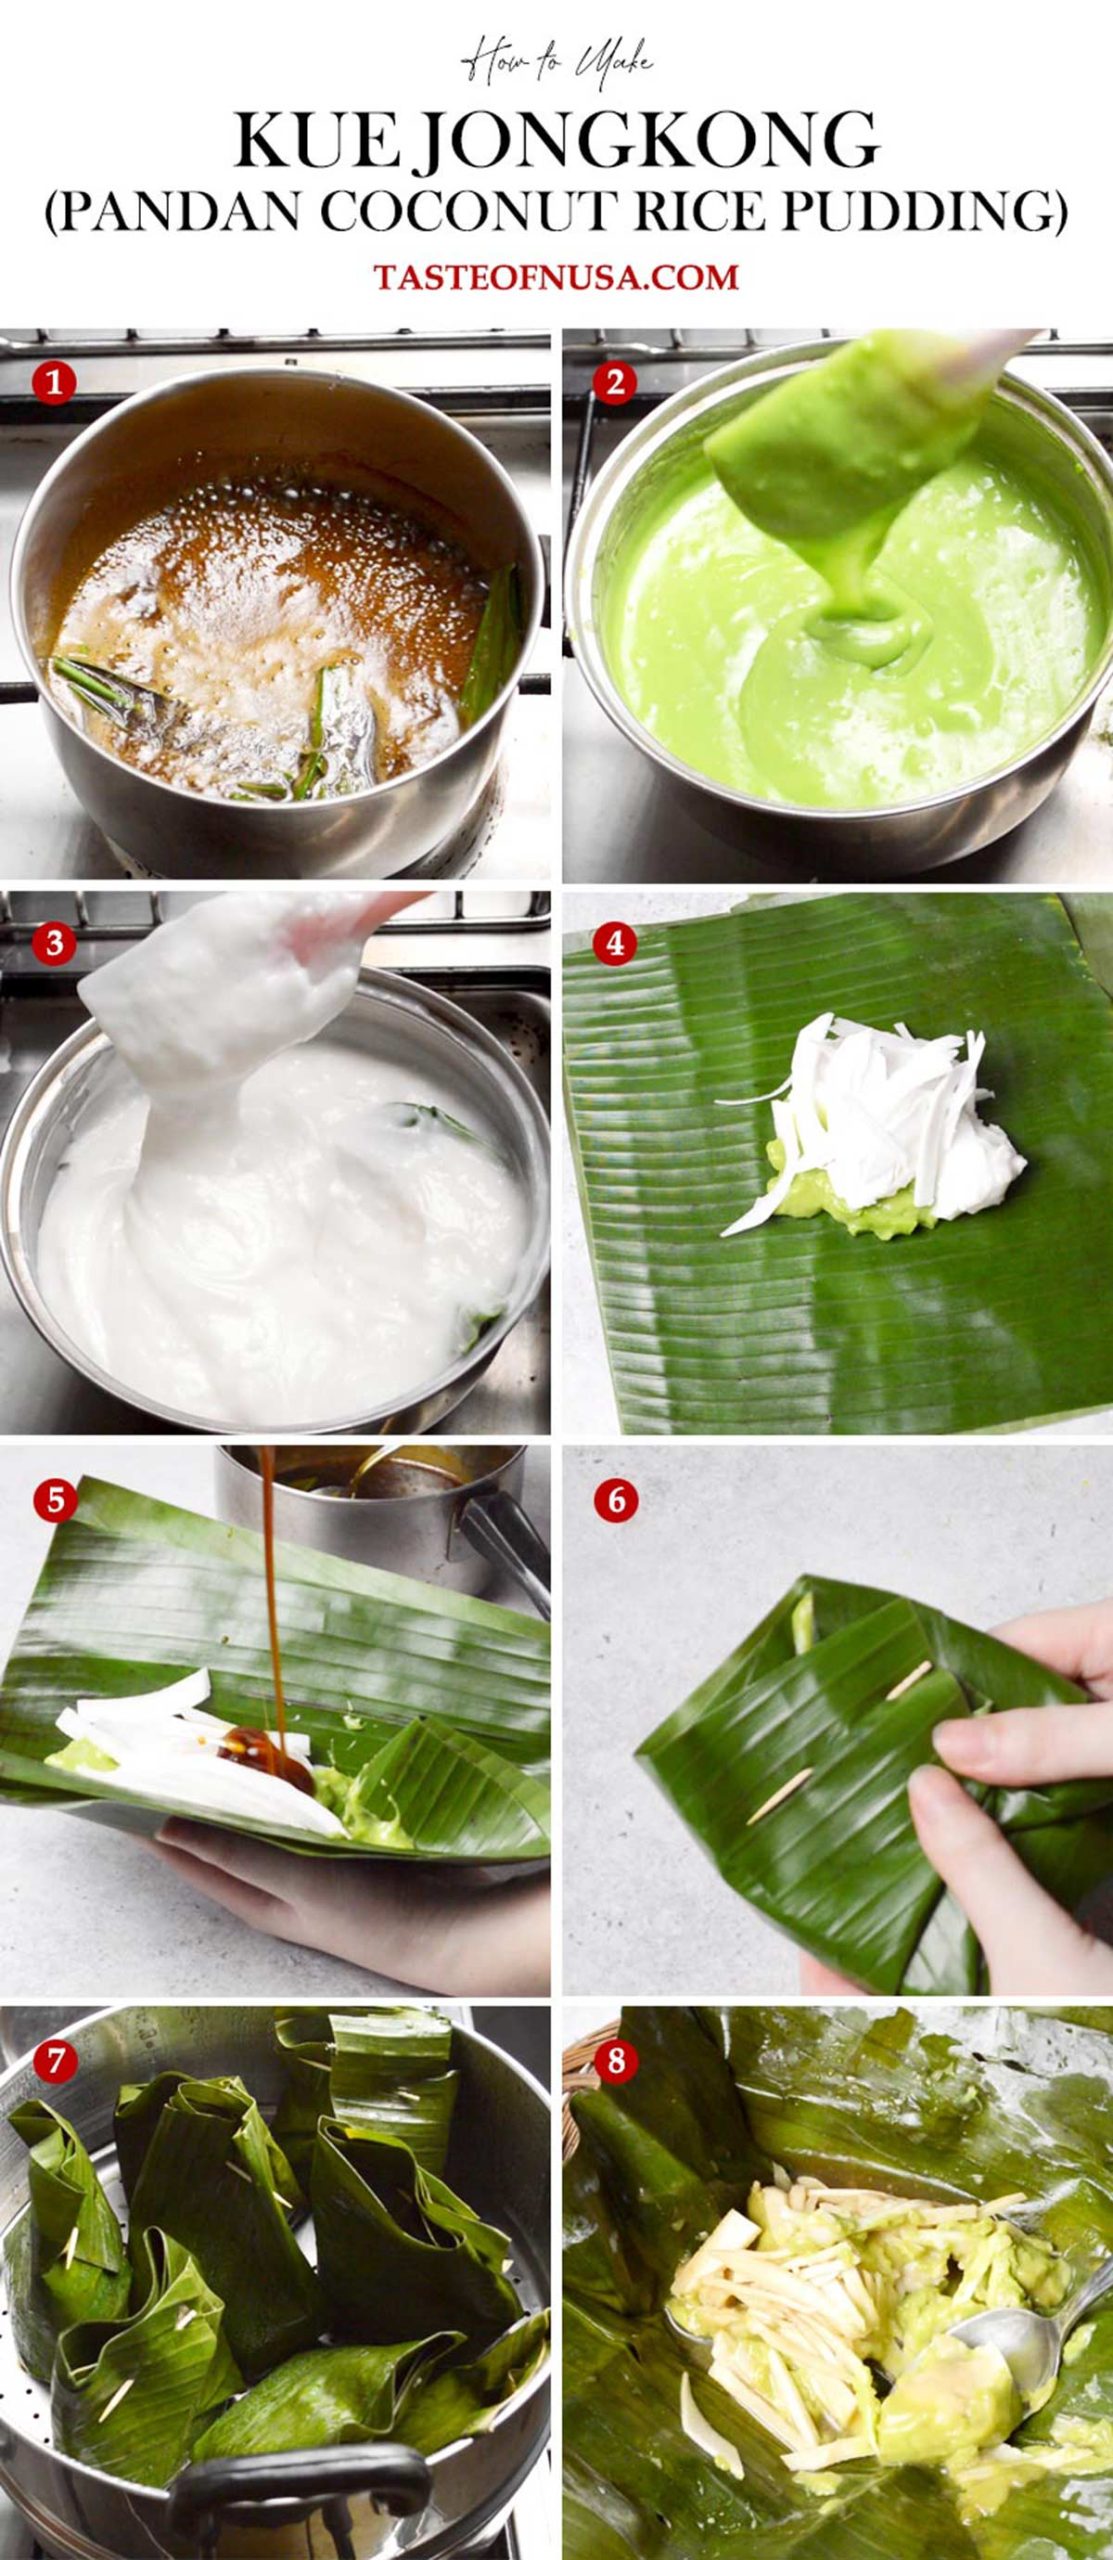 how to make kue jongkong pandan coconut rice pudding wrapped in banana leaves